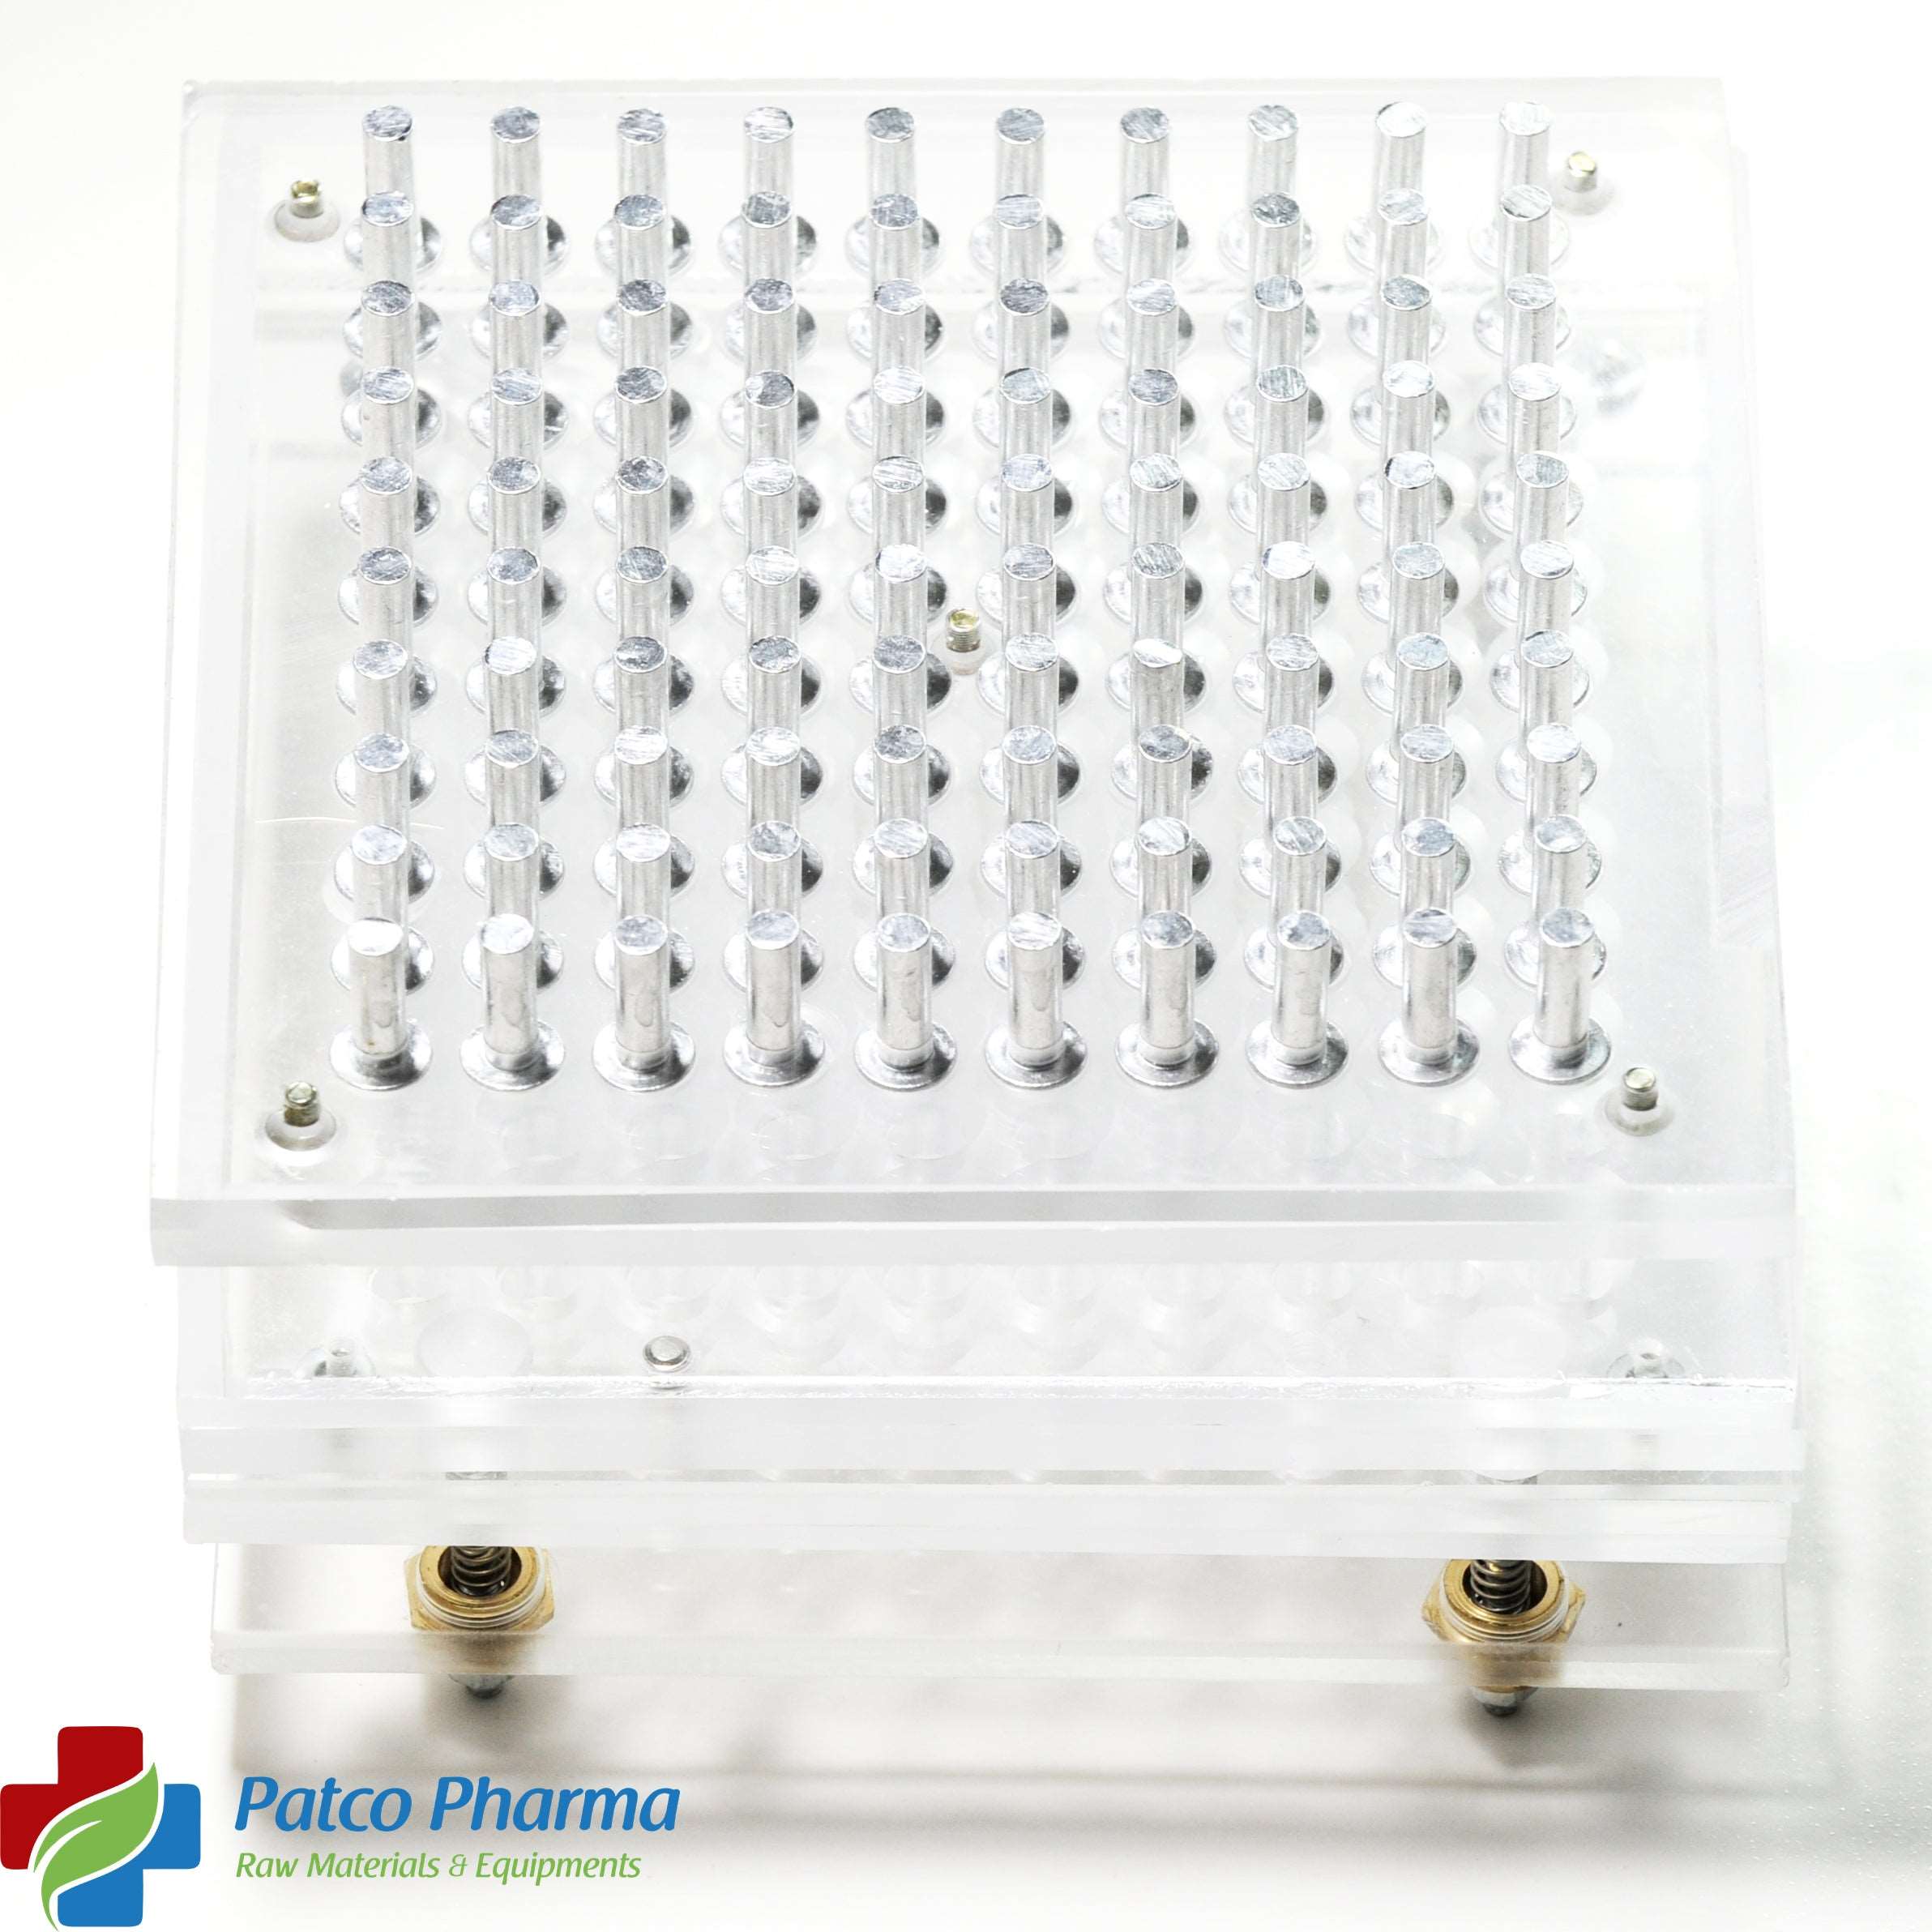 100 Holes Acrylic - Manual Empty Capsule Filling Machine (Size 5 Capsule - 150 Mg Powder Filling) Patco Pharma